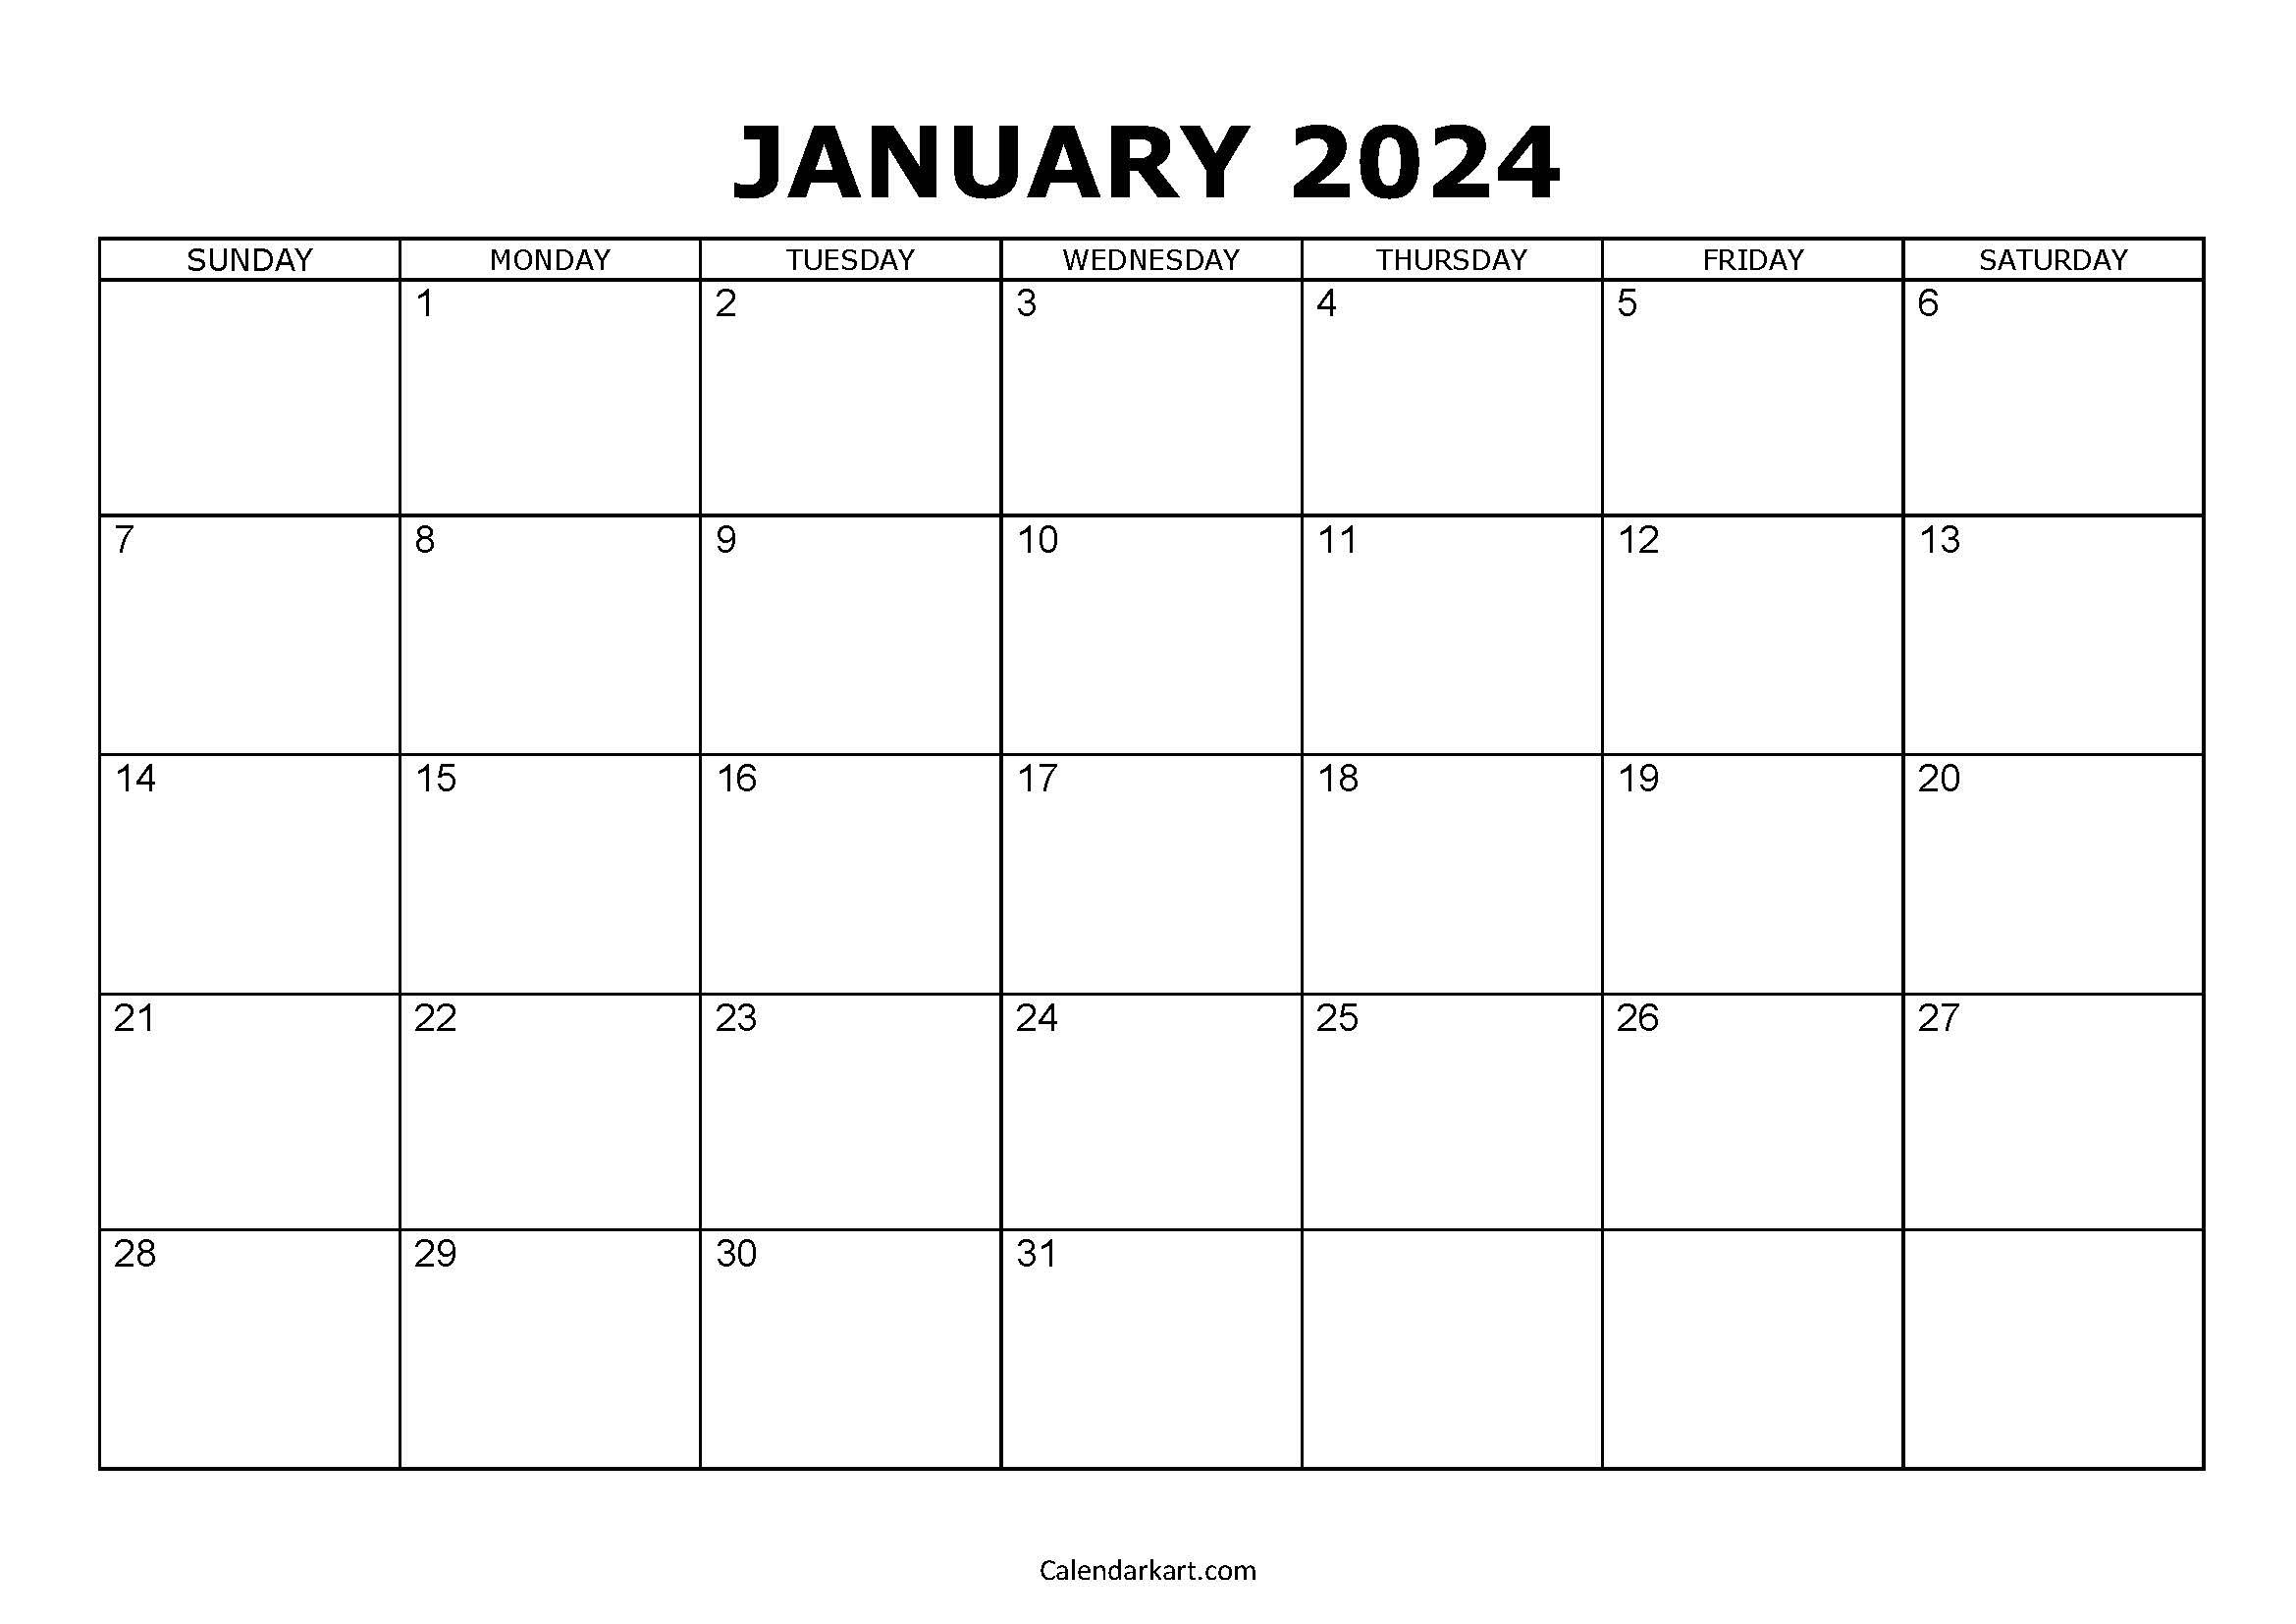 Free Printable January 2024 Calendars - Calendarkart with Free Printable Calendar 2024 Big Boxes